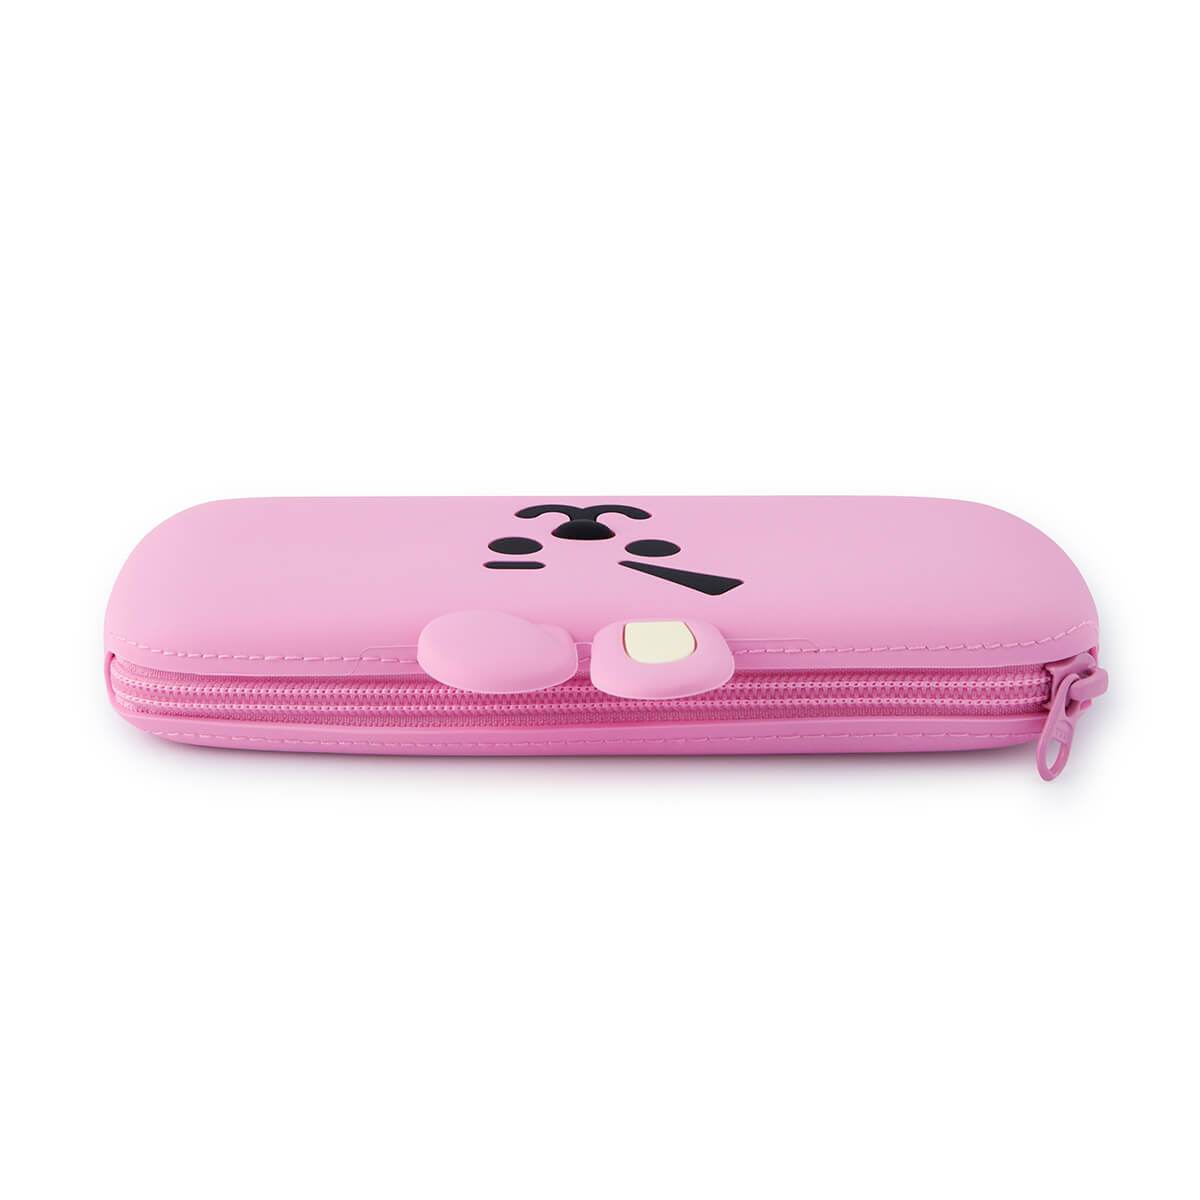 Cooky Stand Pencil Case Pink - tokopie